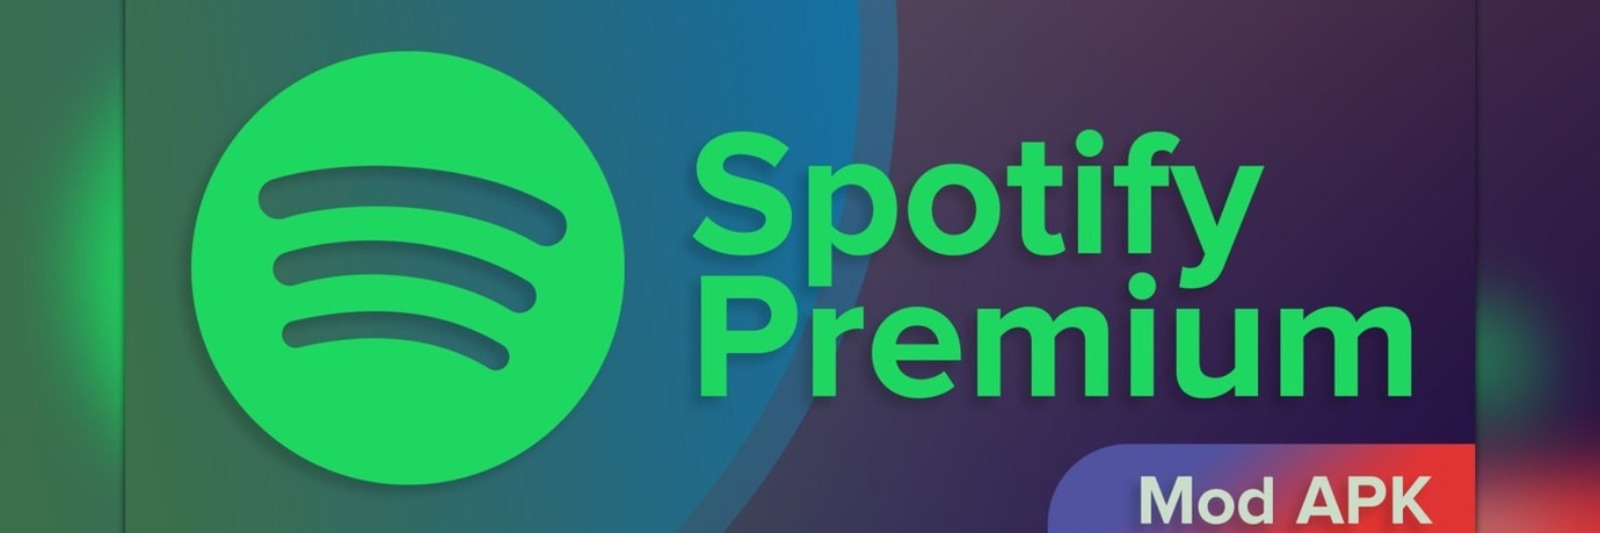 Spotify Premium APK Cover Image